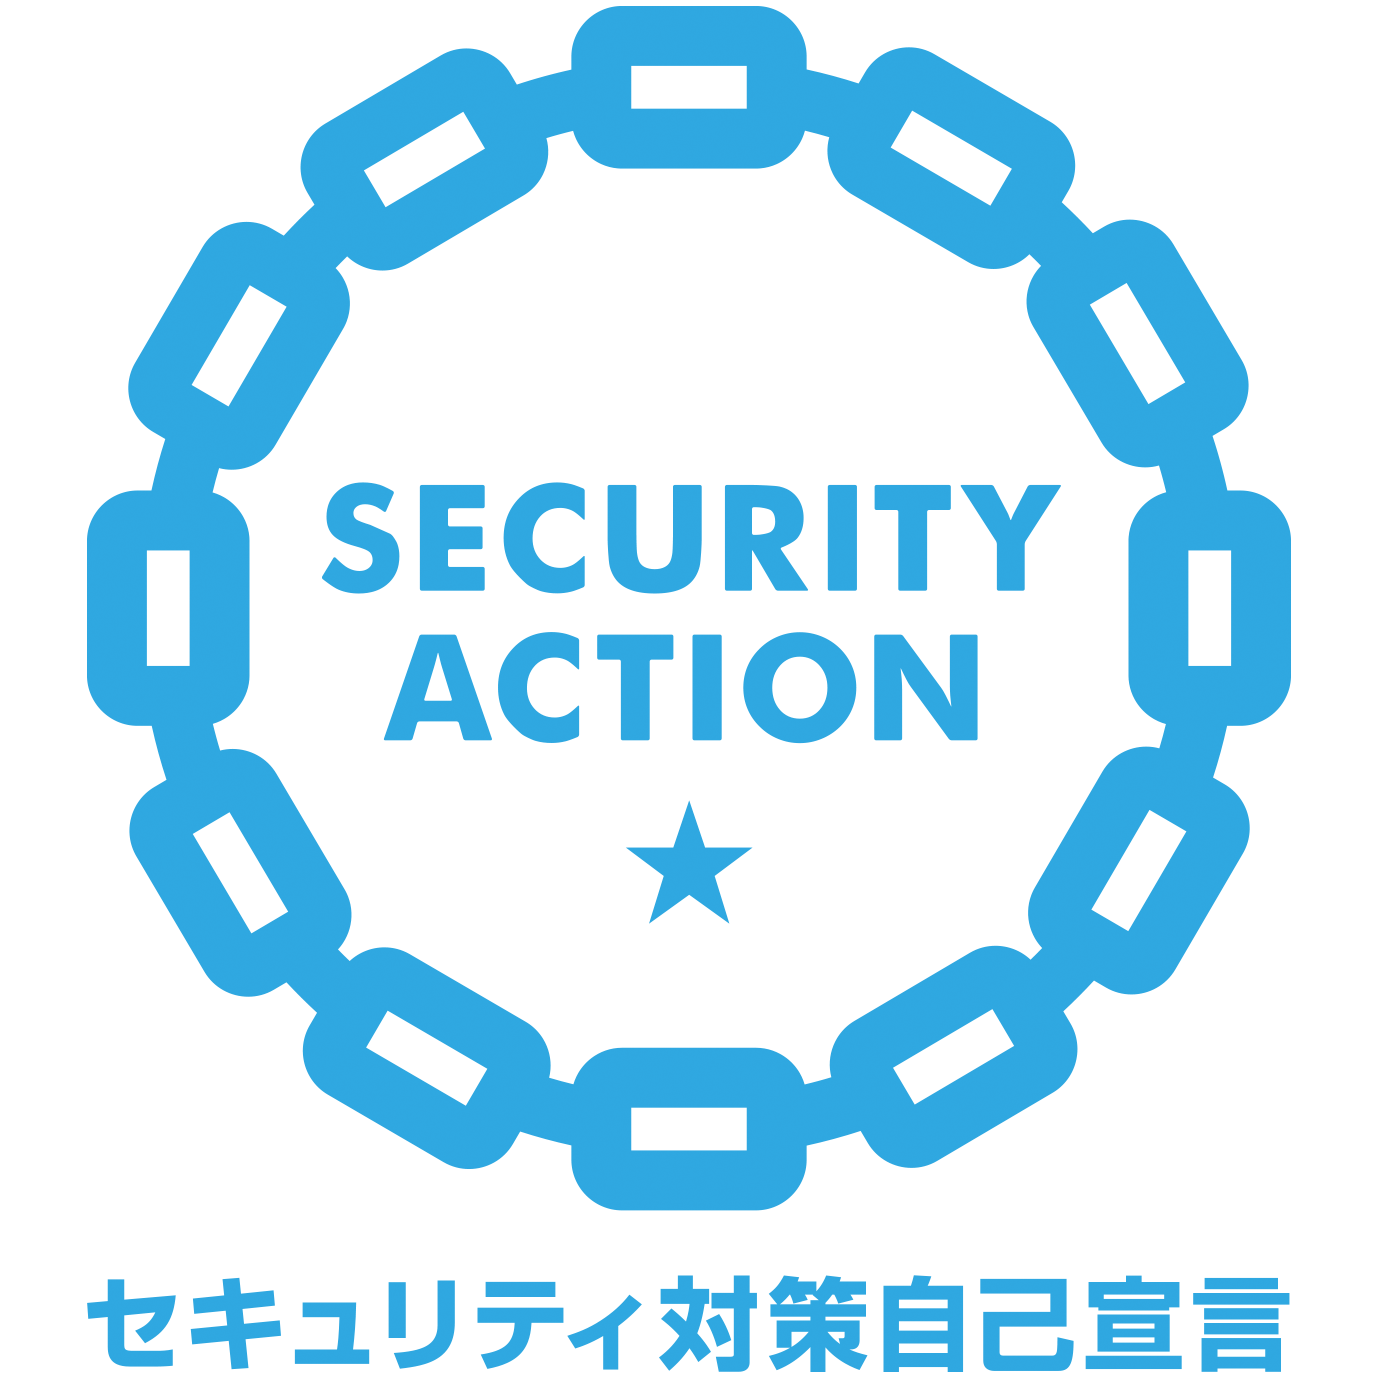 <p>SECURITY ACTION<br />
セキュリティ対策自己宣言</p>
